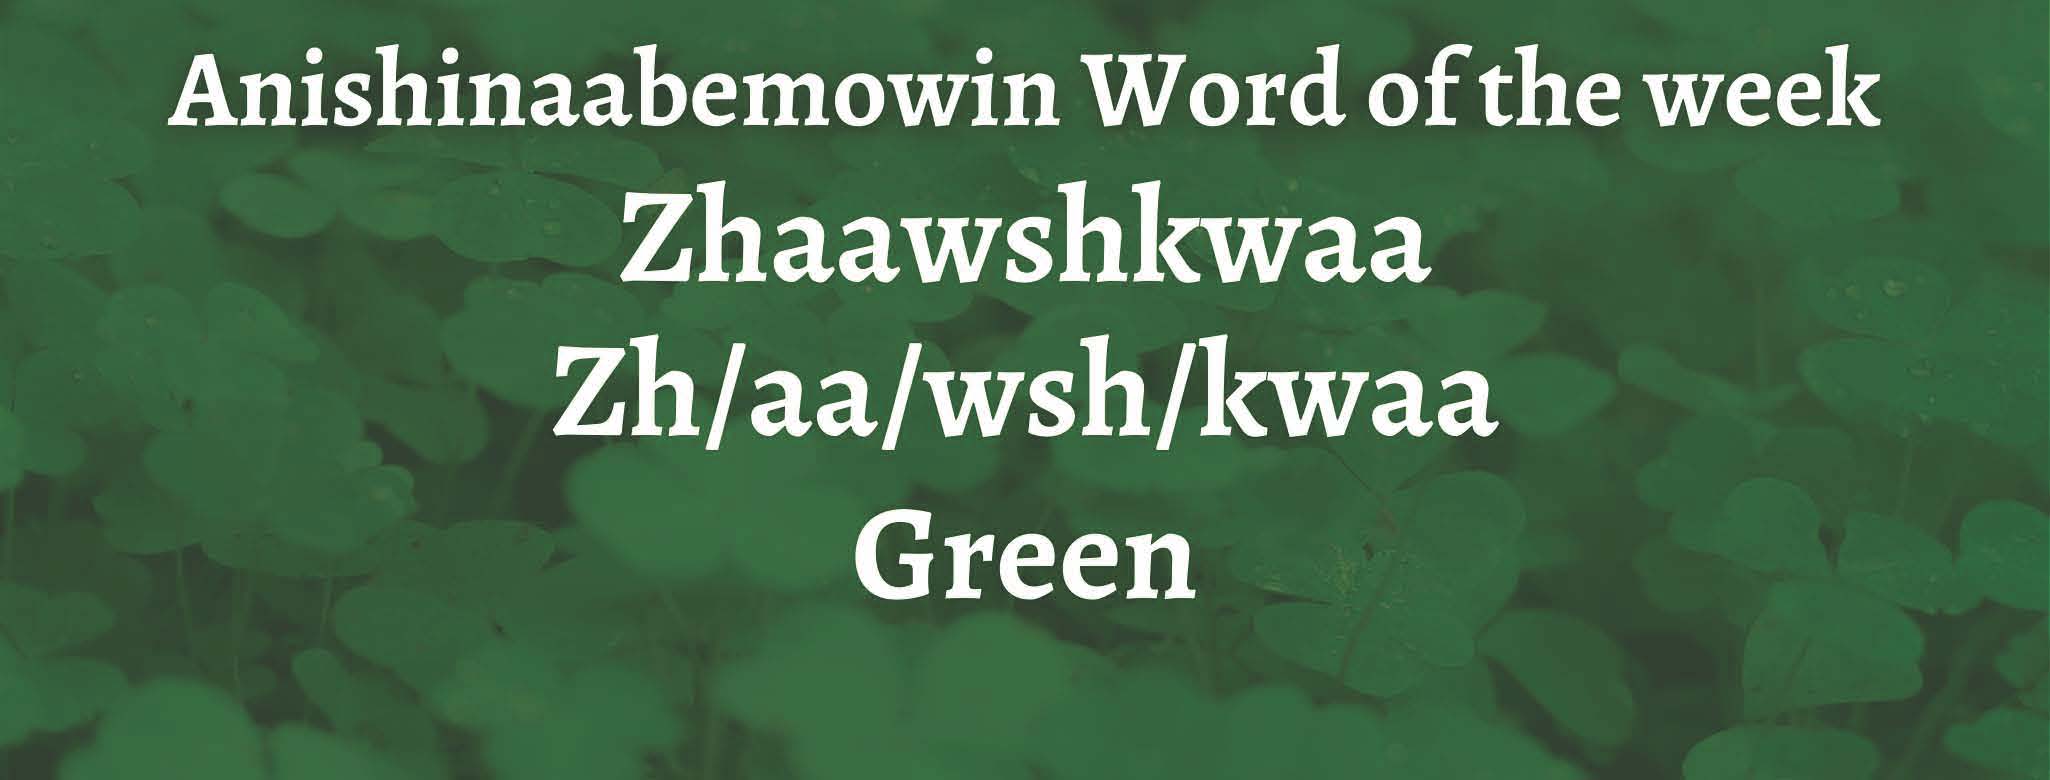 Anishinaabemowin Word of the week Zhaawshkwaa Green